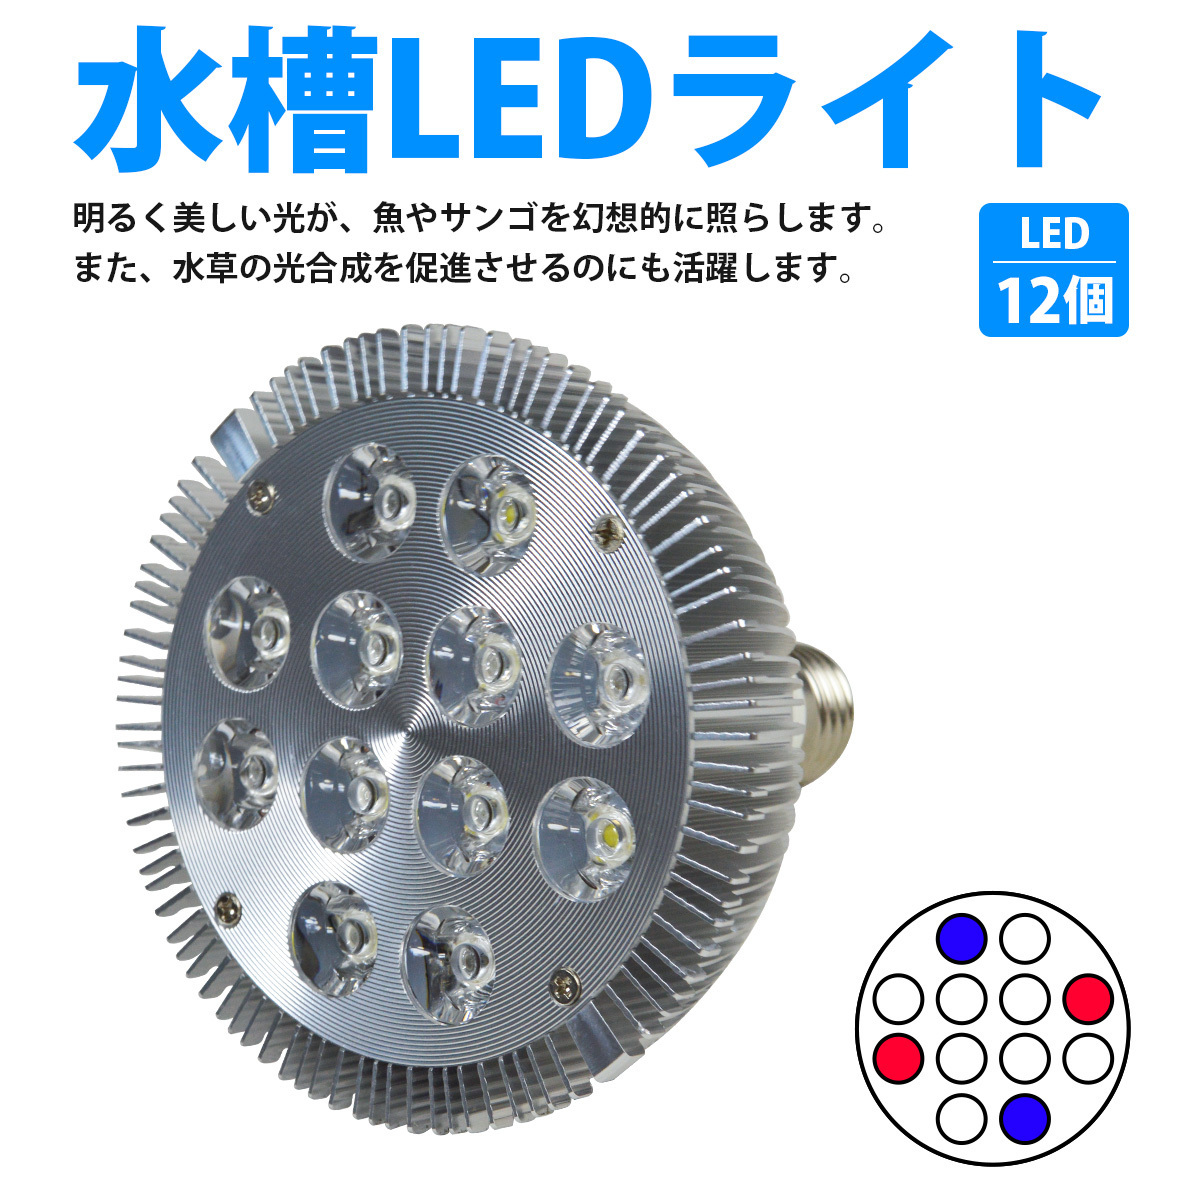 LED 電球 スポットライト 24W(2W×12)白8青2赤2 水槽 照明 E26 LEDスポットライト 電気 水草 サンゴ 熱帯魚 観賞魚 植物育成_laqua-b-007-sv-01-a